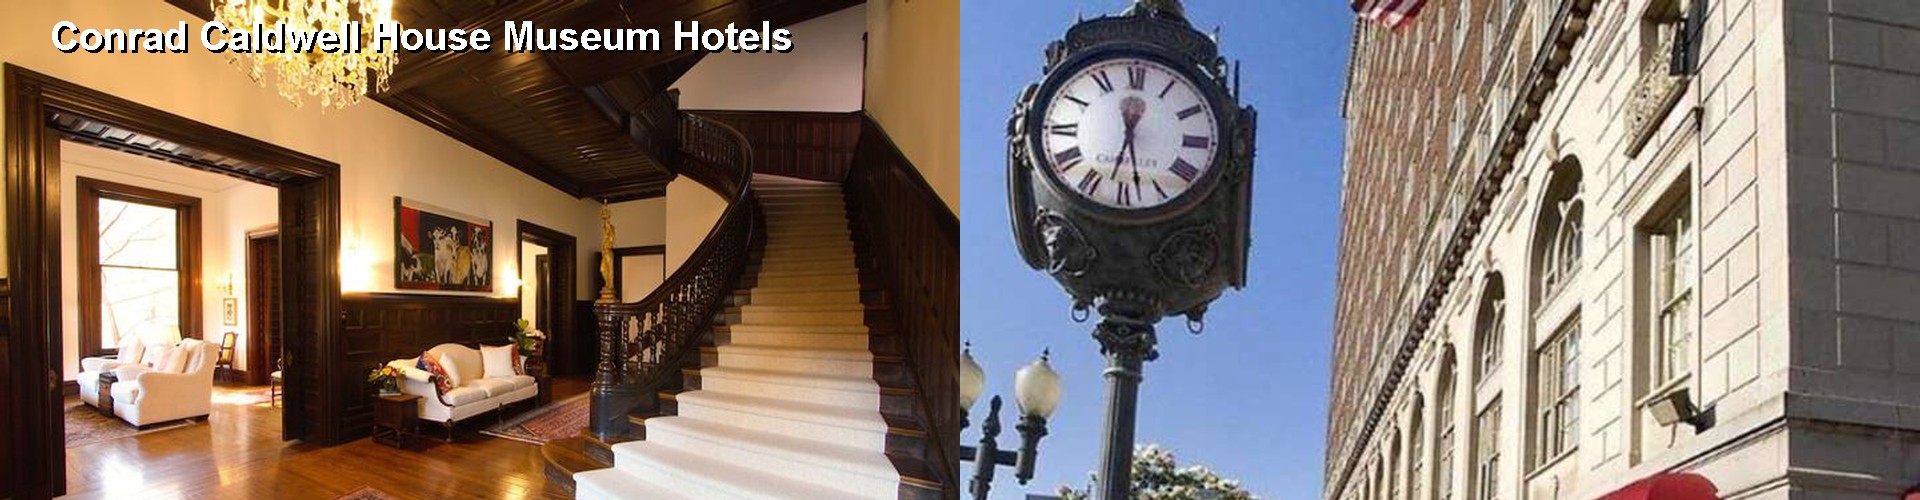 5 Best Hotels near Conrad Caldwell House Museum